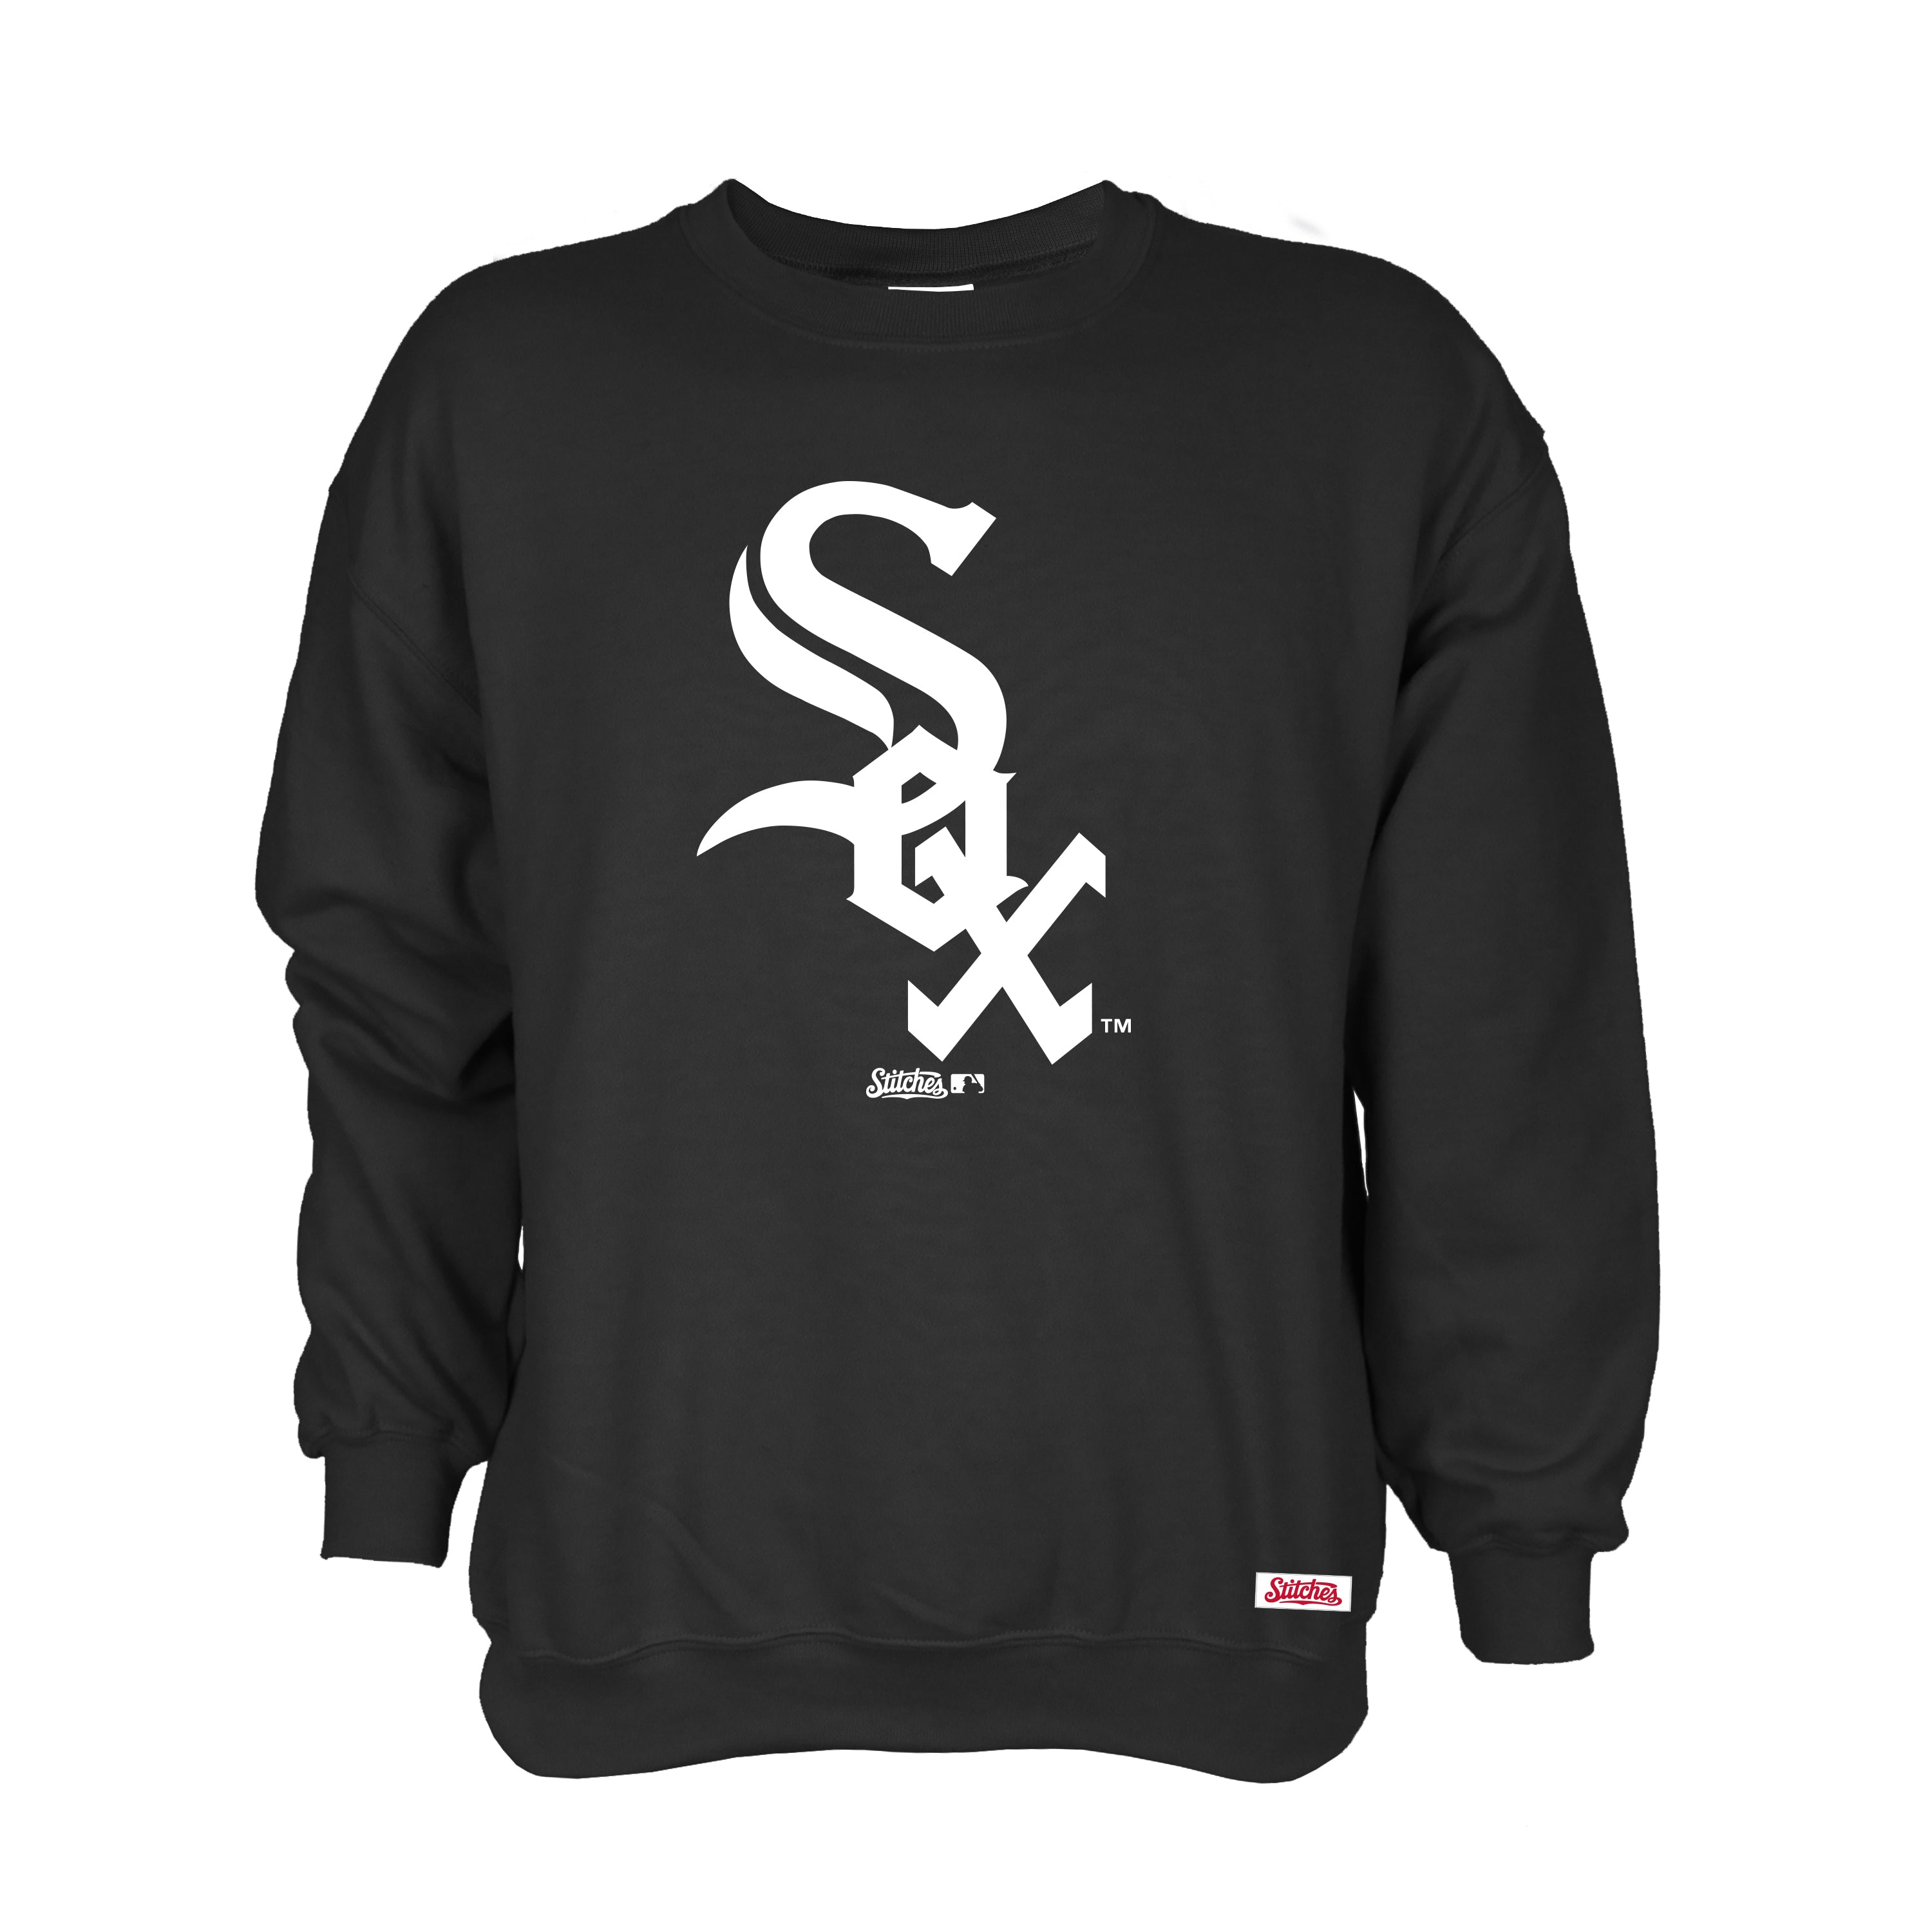 Chicago White Sox Pride Logo Black Long-Sleeve T-Shirt - Clark Street Sports